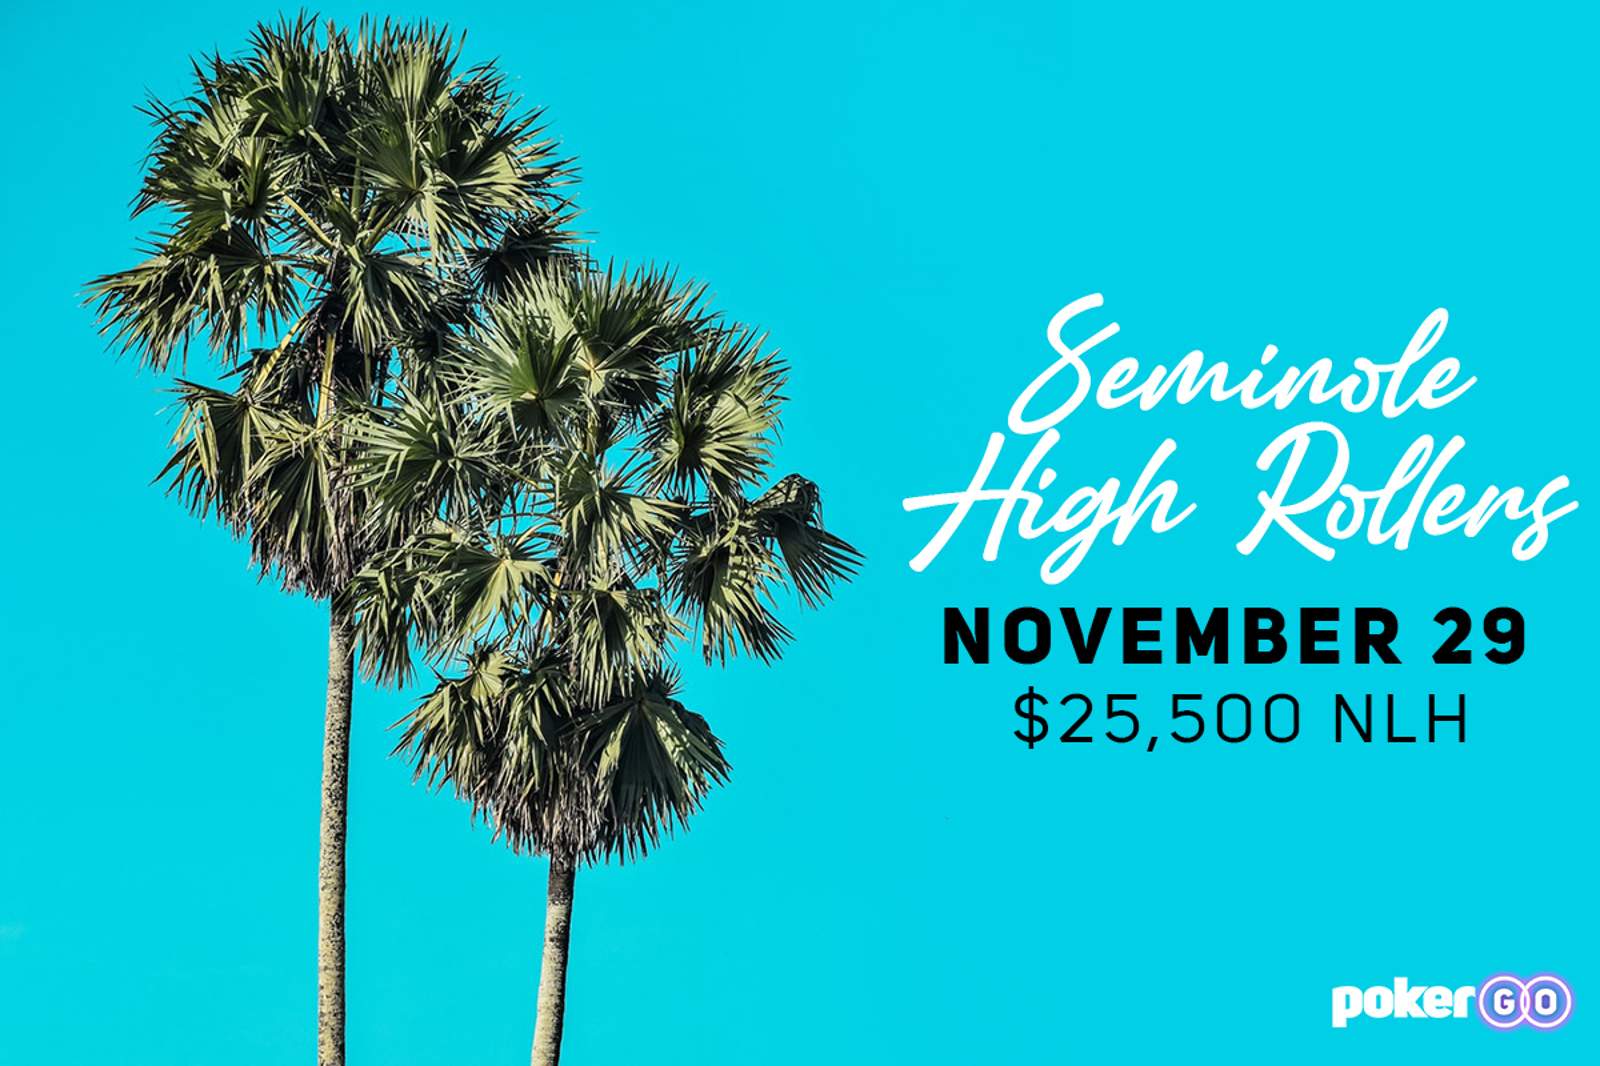 Seminole $25K High Roller Set for November 29